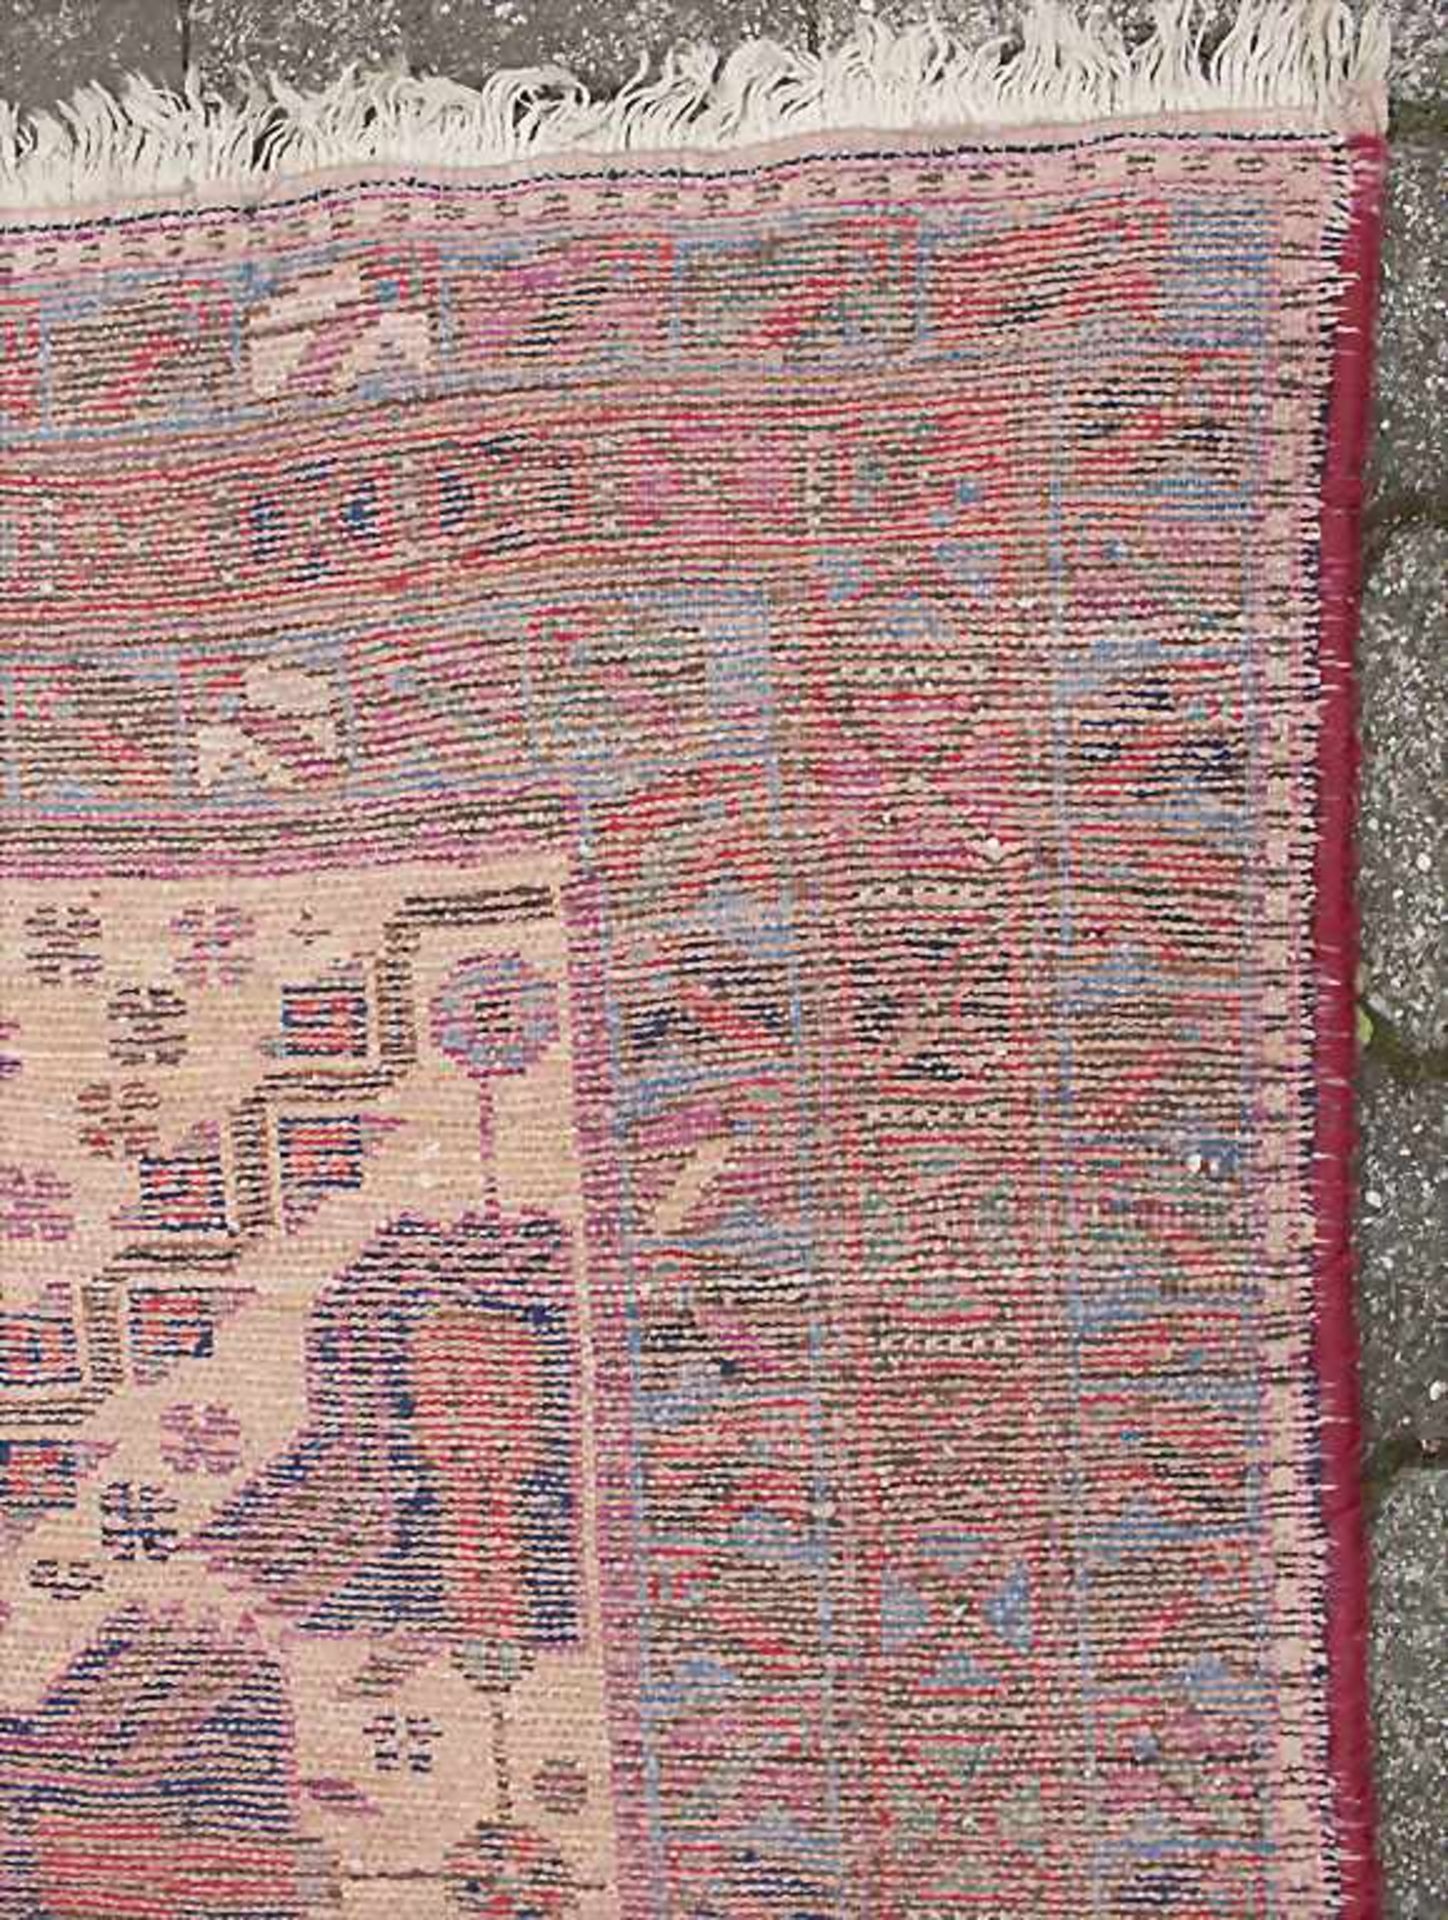 Teppich / A carpet - Bild 4 aus 4